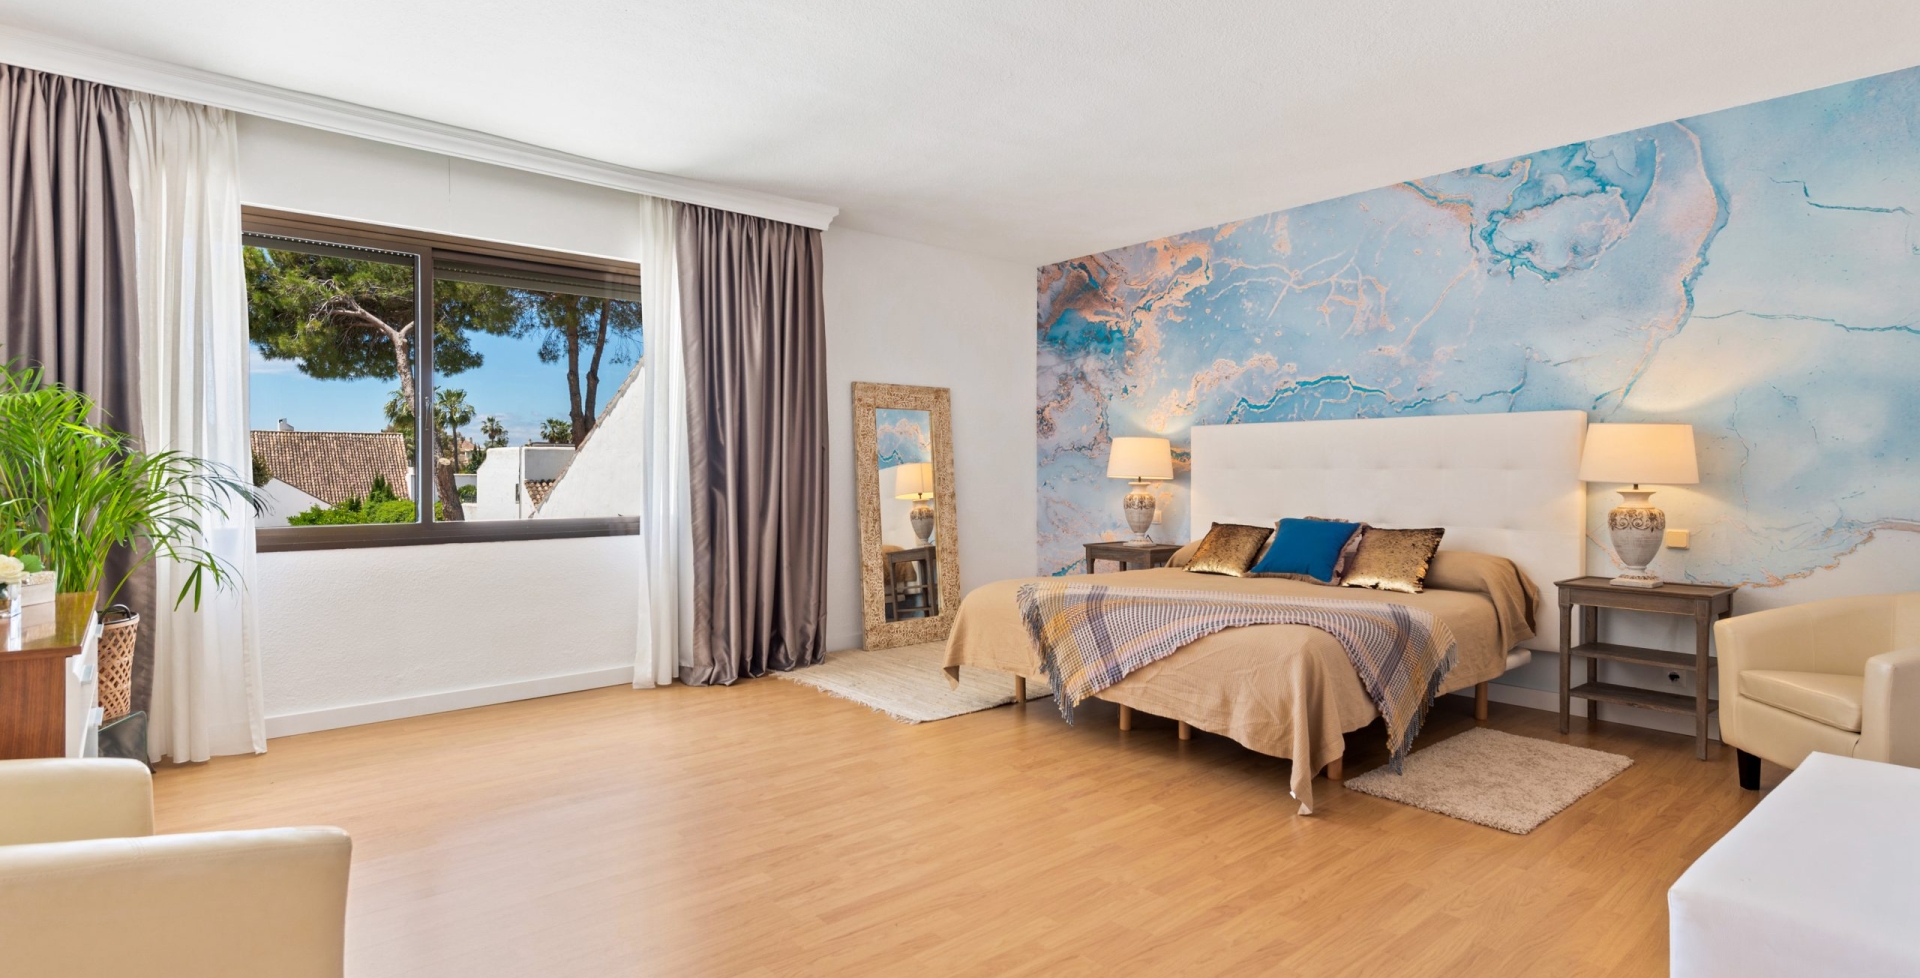 Villa Mar 7 Marbella rental feature wall blue double bedroom